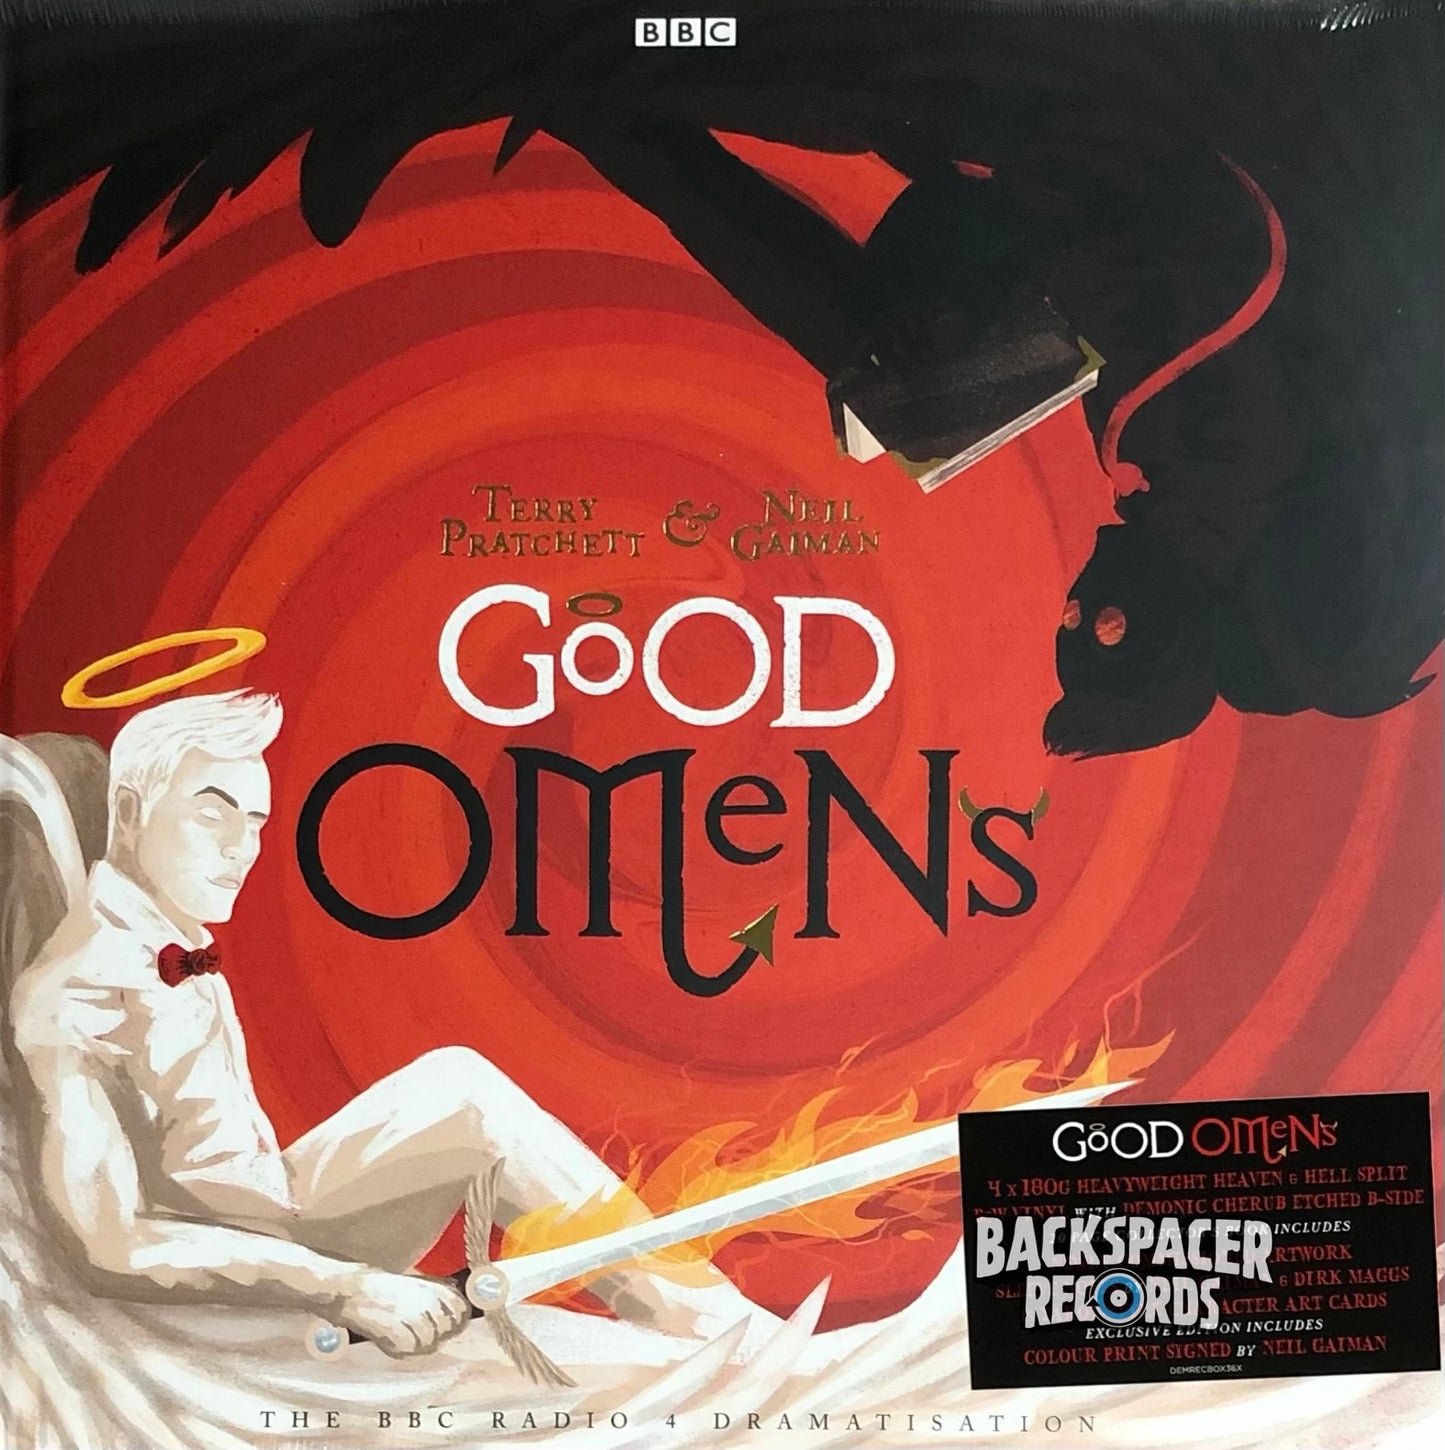 Terry Pratchett & Neil Gaiman - Good Omens (Limited Edition) 4-LP (Signed)